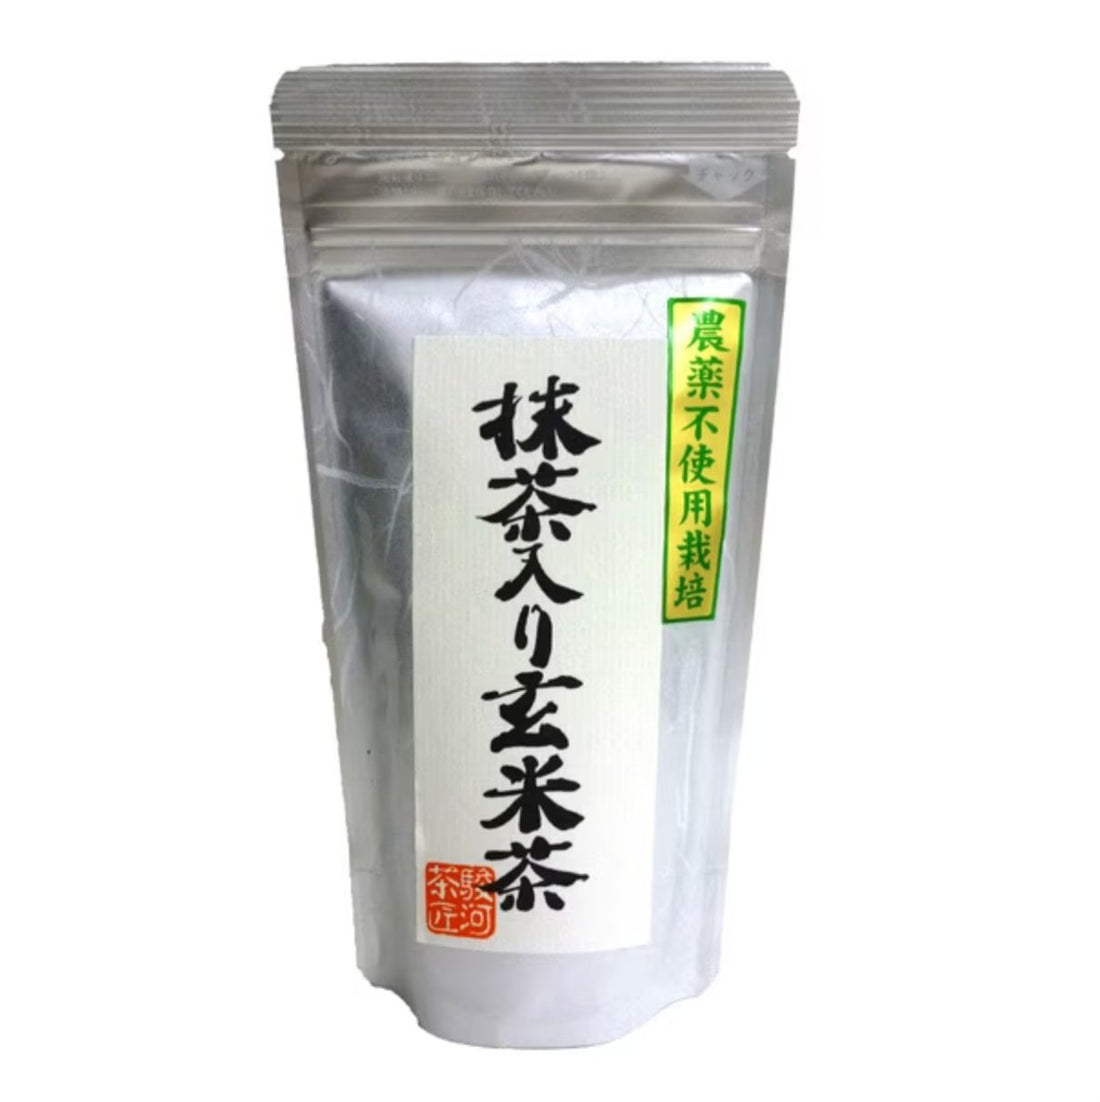 Hagiri pesticide-free cultivation matcha brown rice tea 100g - NihonMura